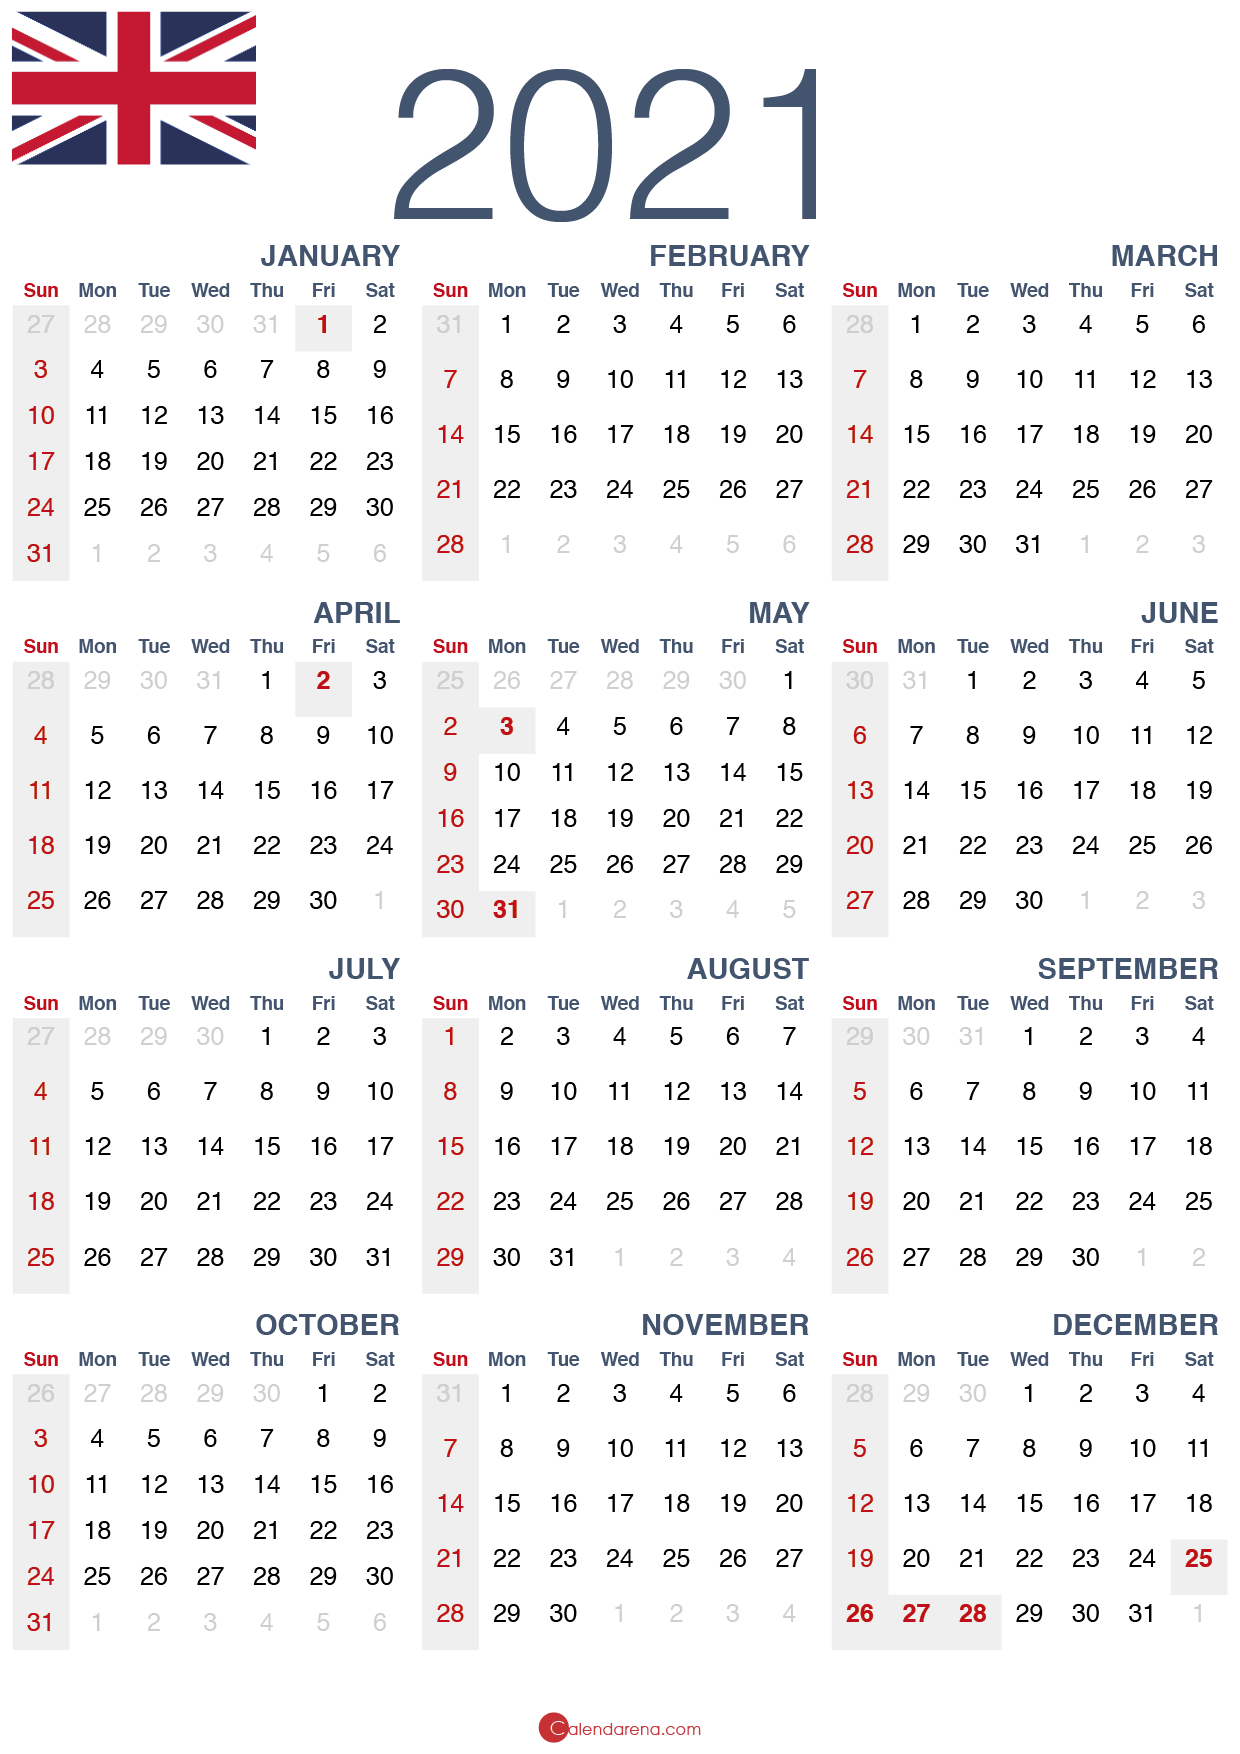 Download Free 2021 Calendar Uk United Kingdom